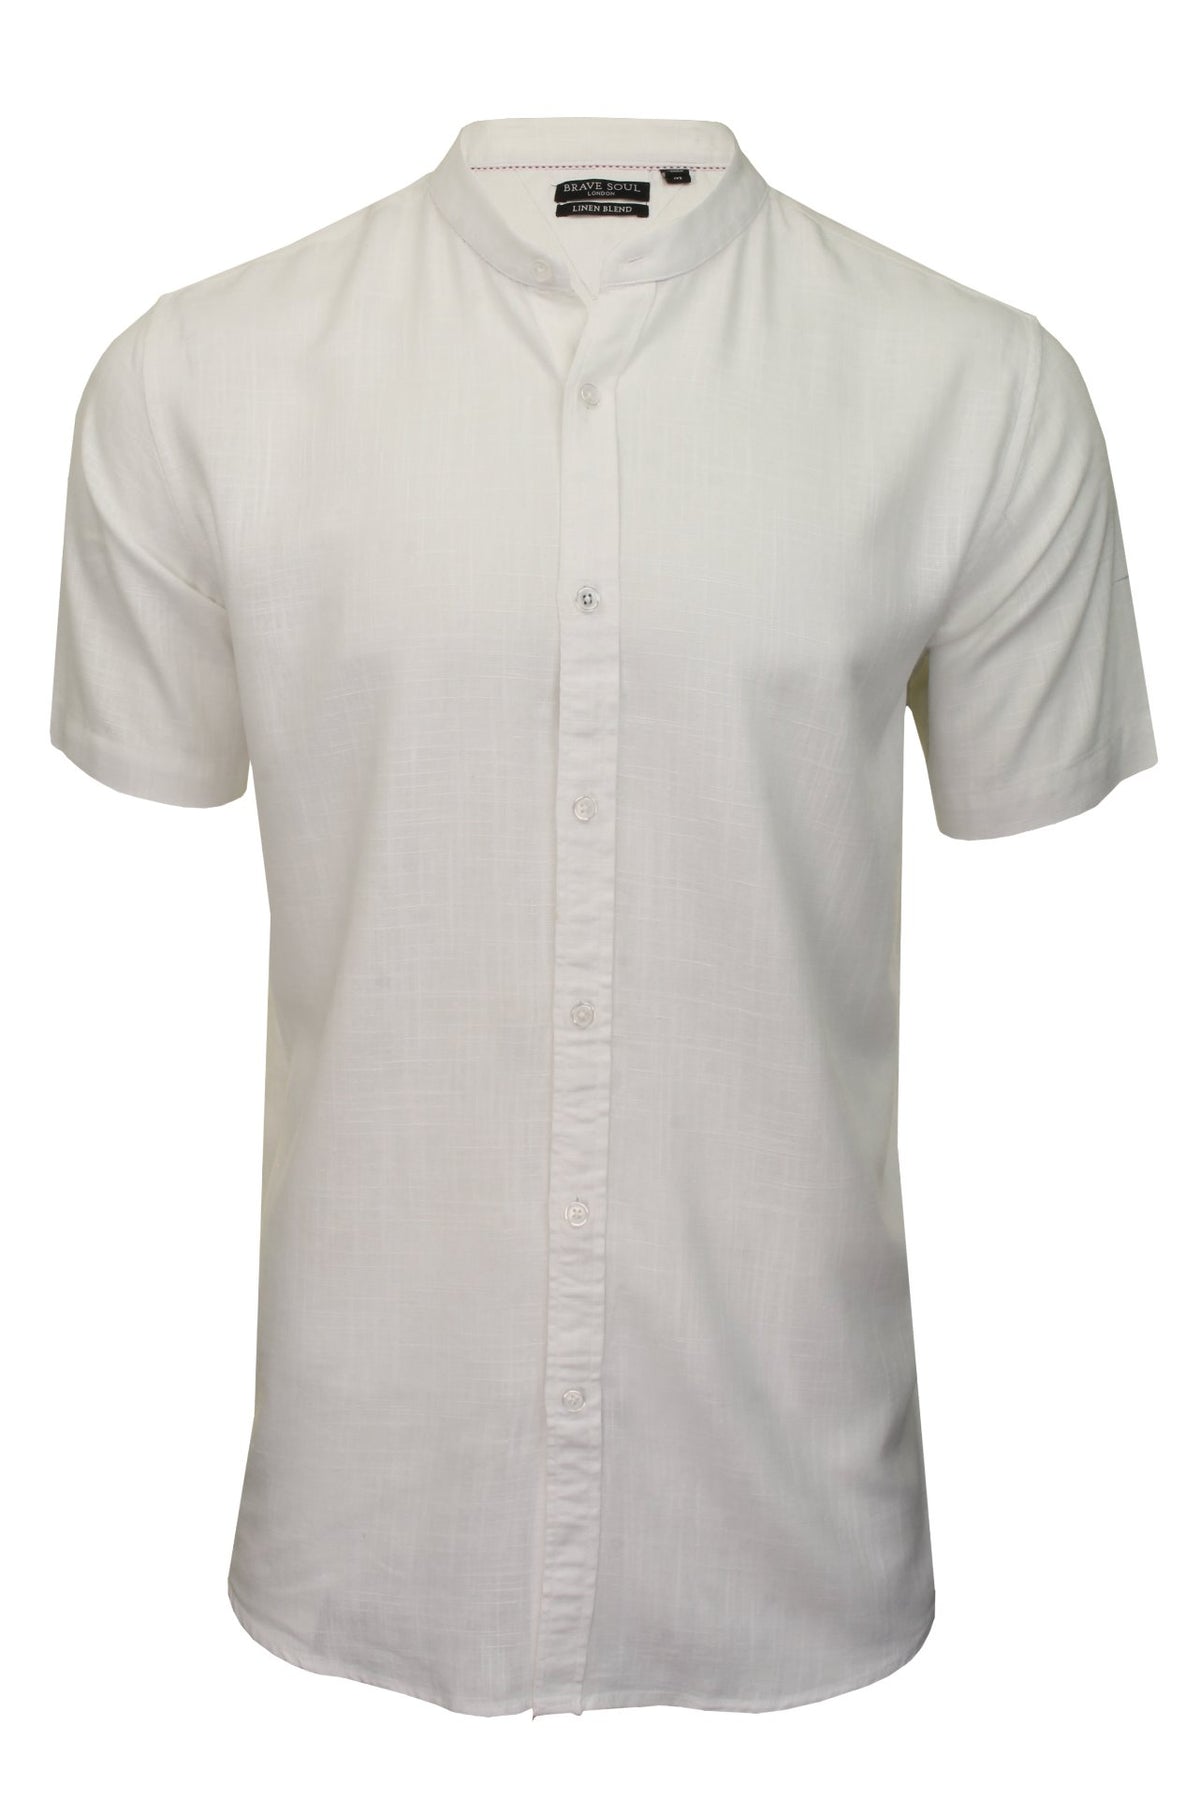 Brave Soul Mens 'Anglo' Linen Mix Grandad Shirt - Short Sleeved, 01, Msh-508Anglo, Optic White